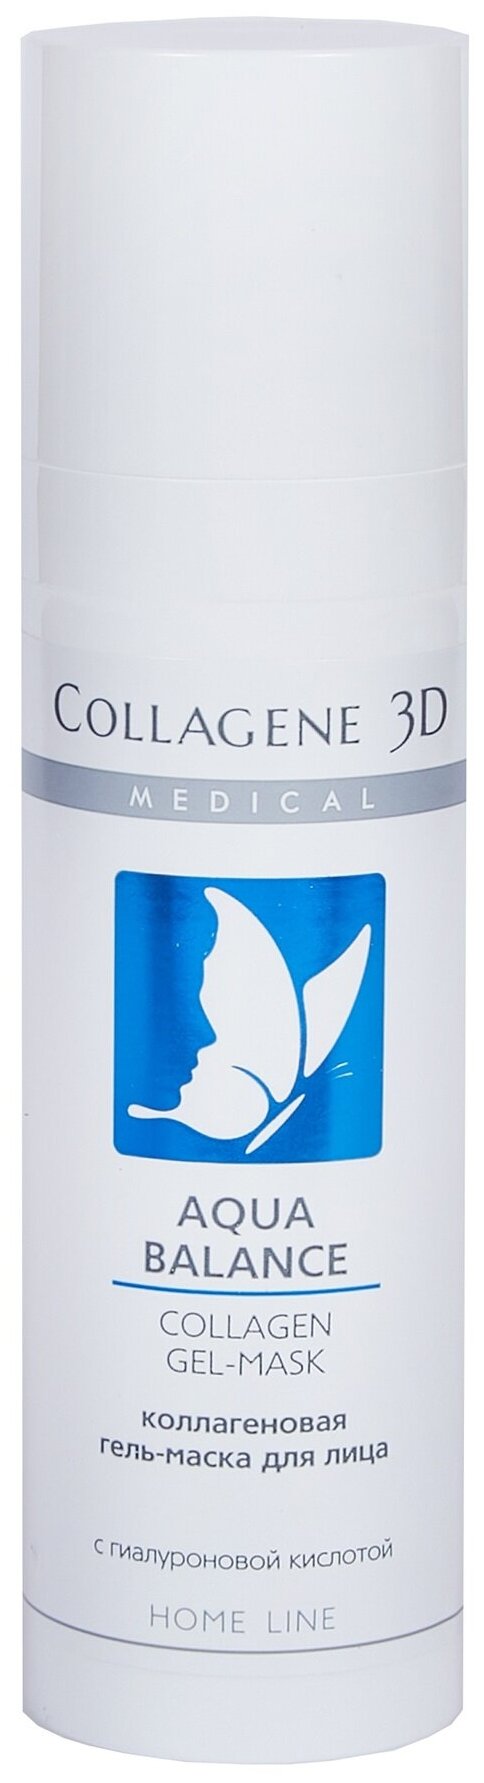 Medical Collagene 3D коллагеновая гель-маска Aqua Balance Home Line, 30 г, 30 мл